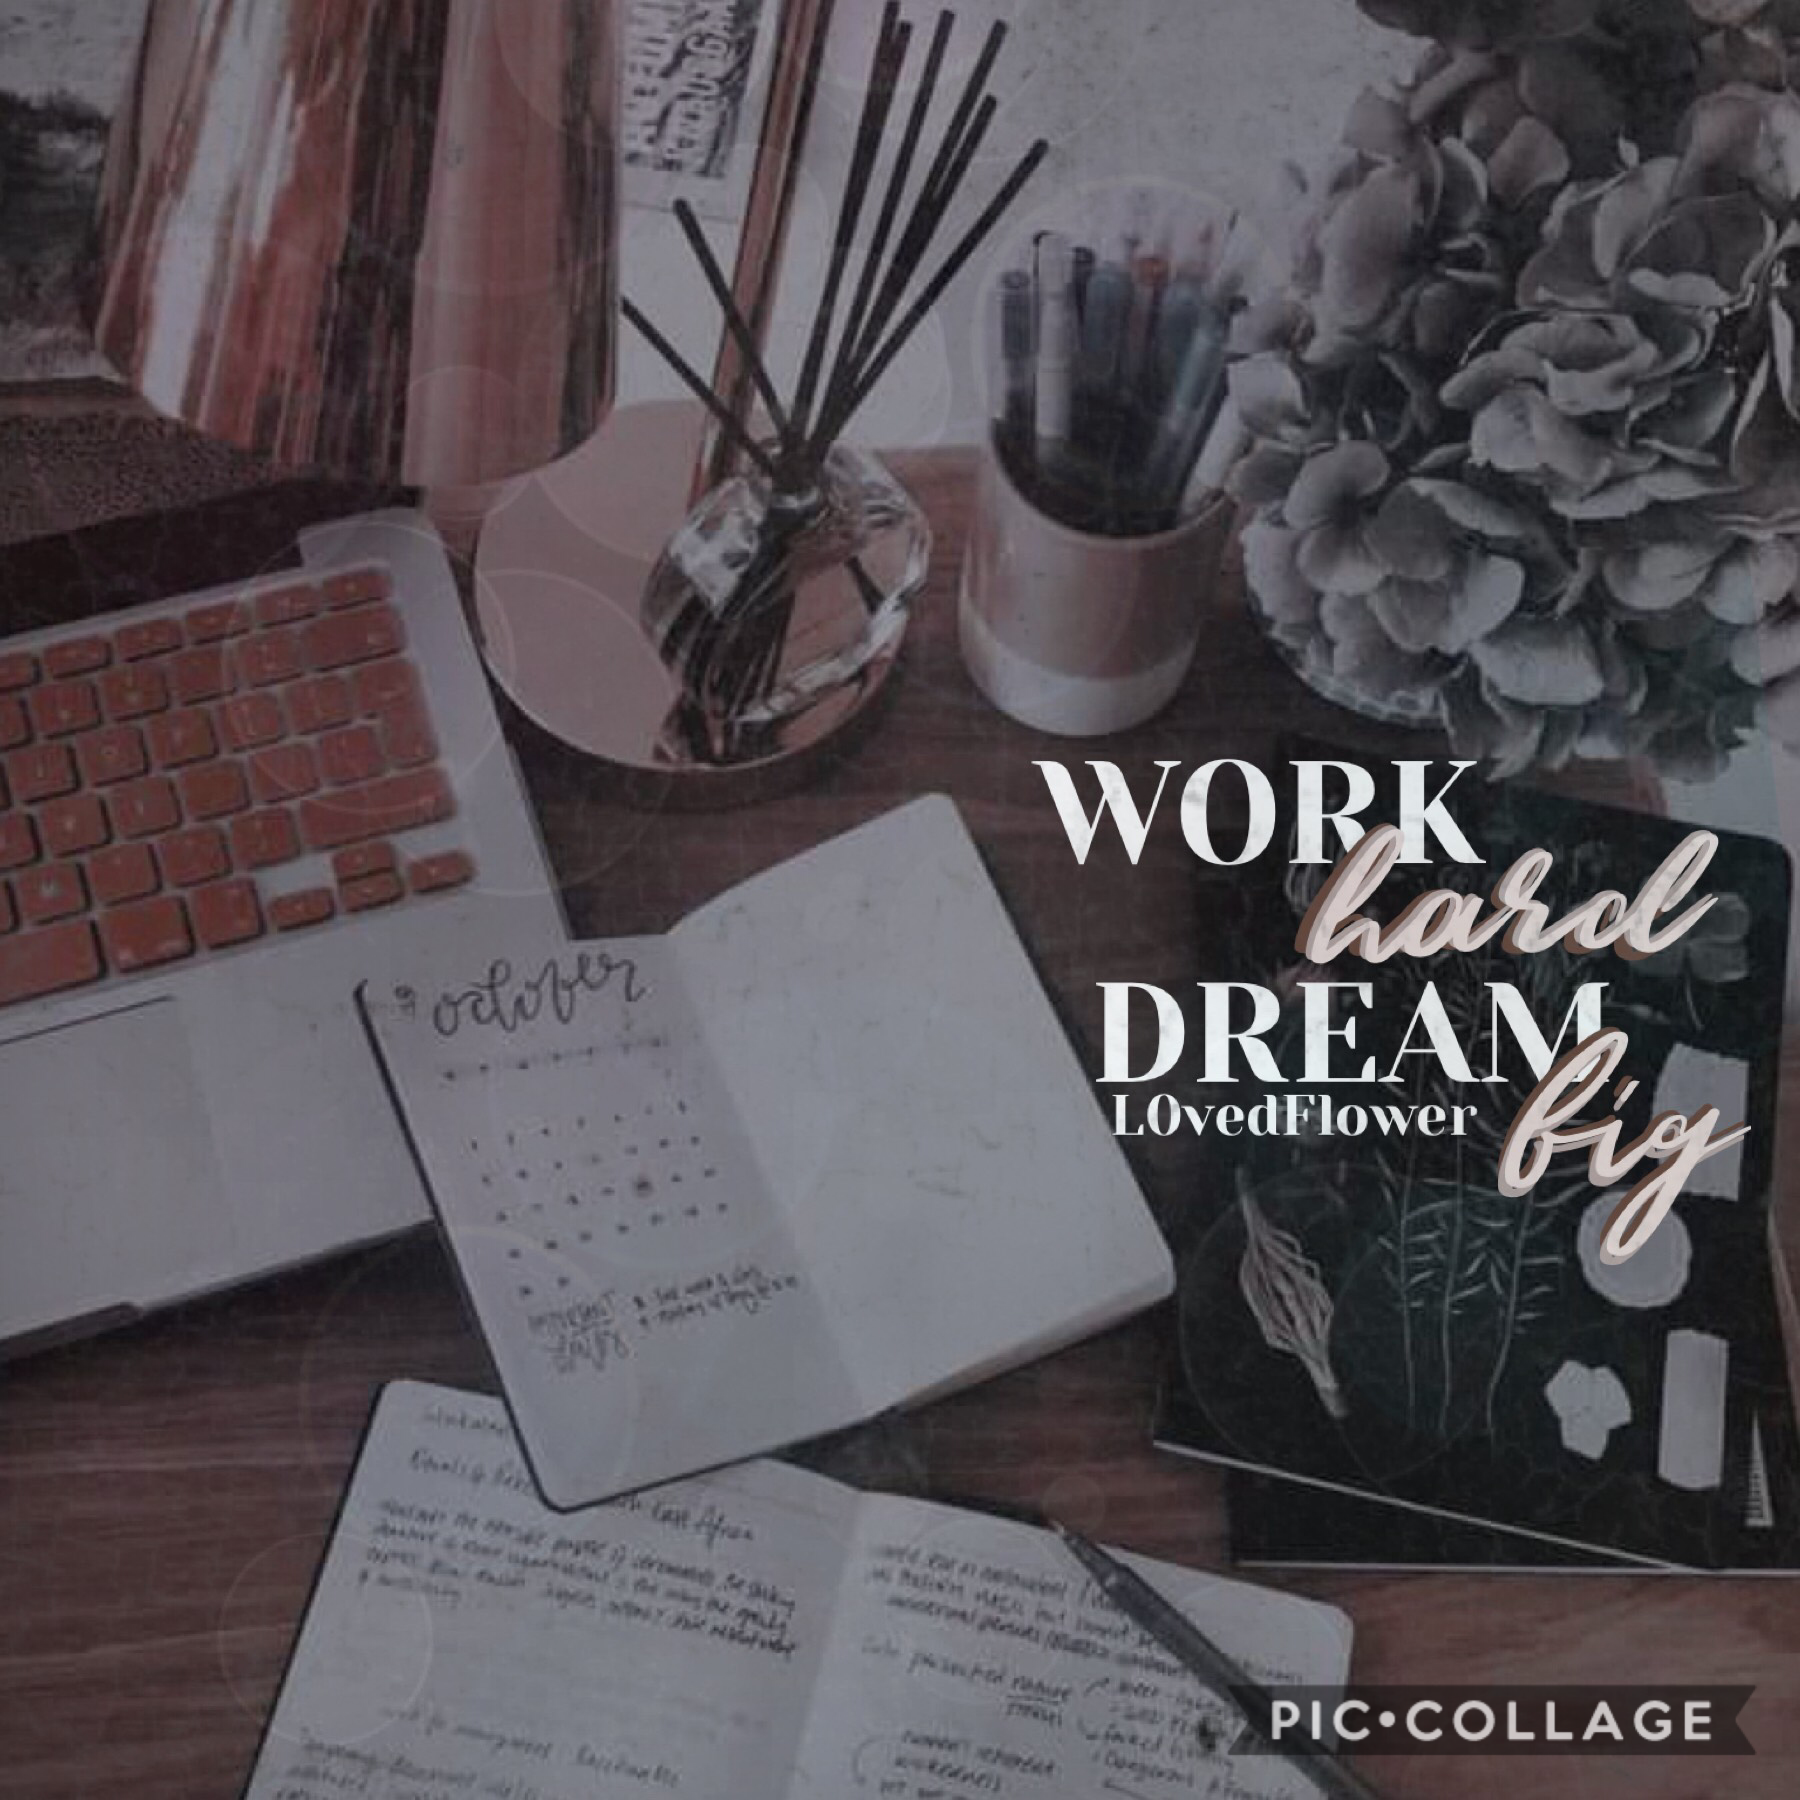 ✰  [click] ✰ 

✰ “work hard, dream big” ✰ 
✰ I really like this! ✰